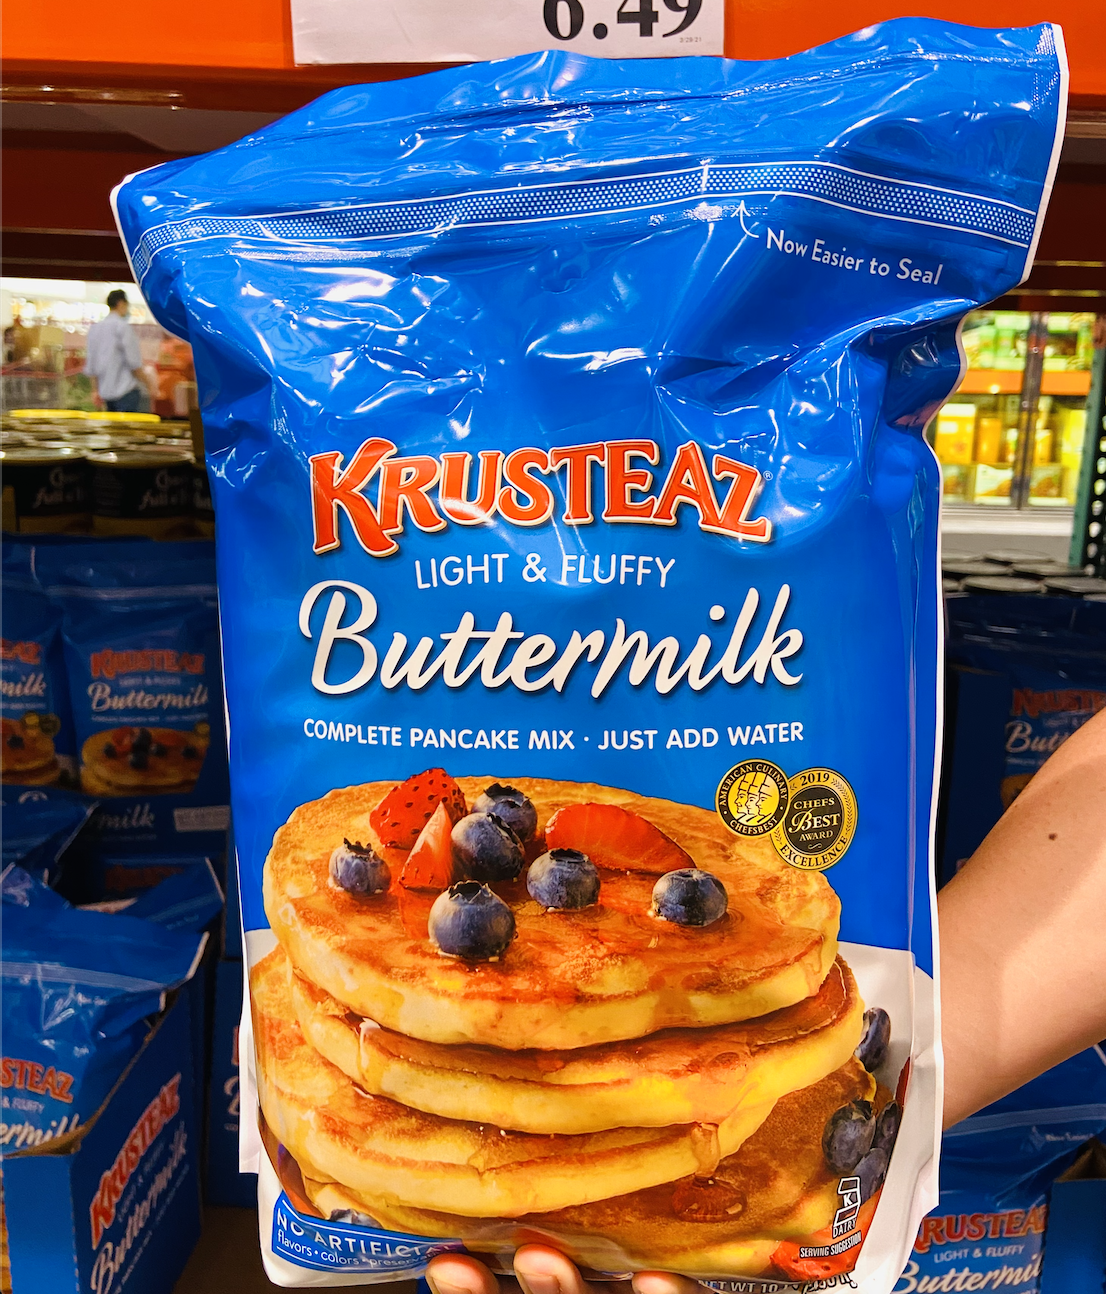 A hand holding the blue bag of Krusteaz buttermilk pancake mix